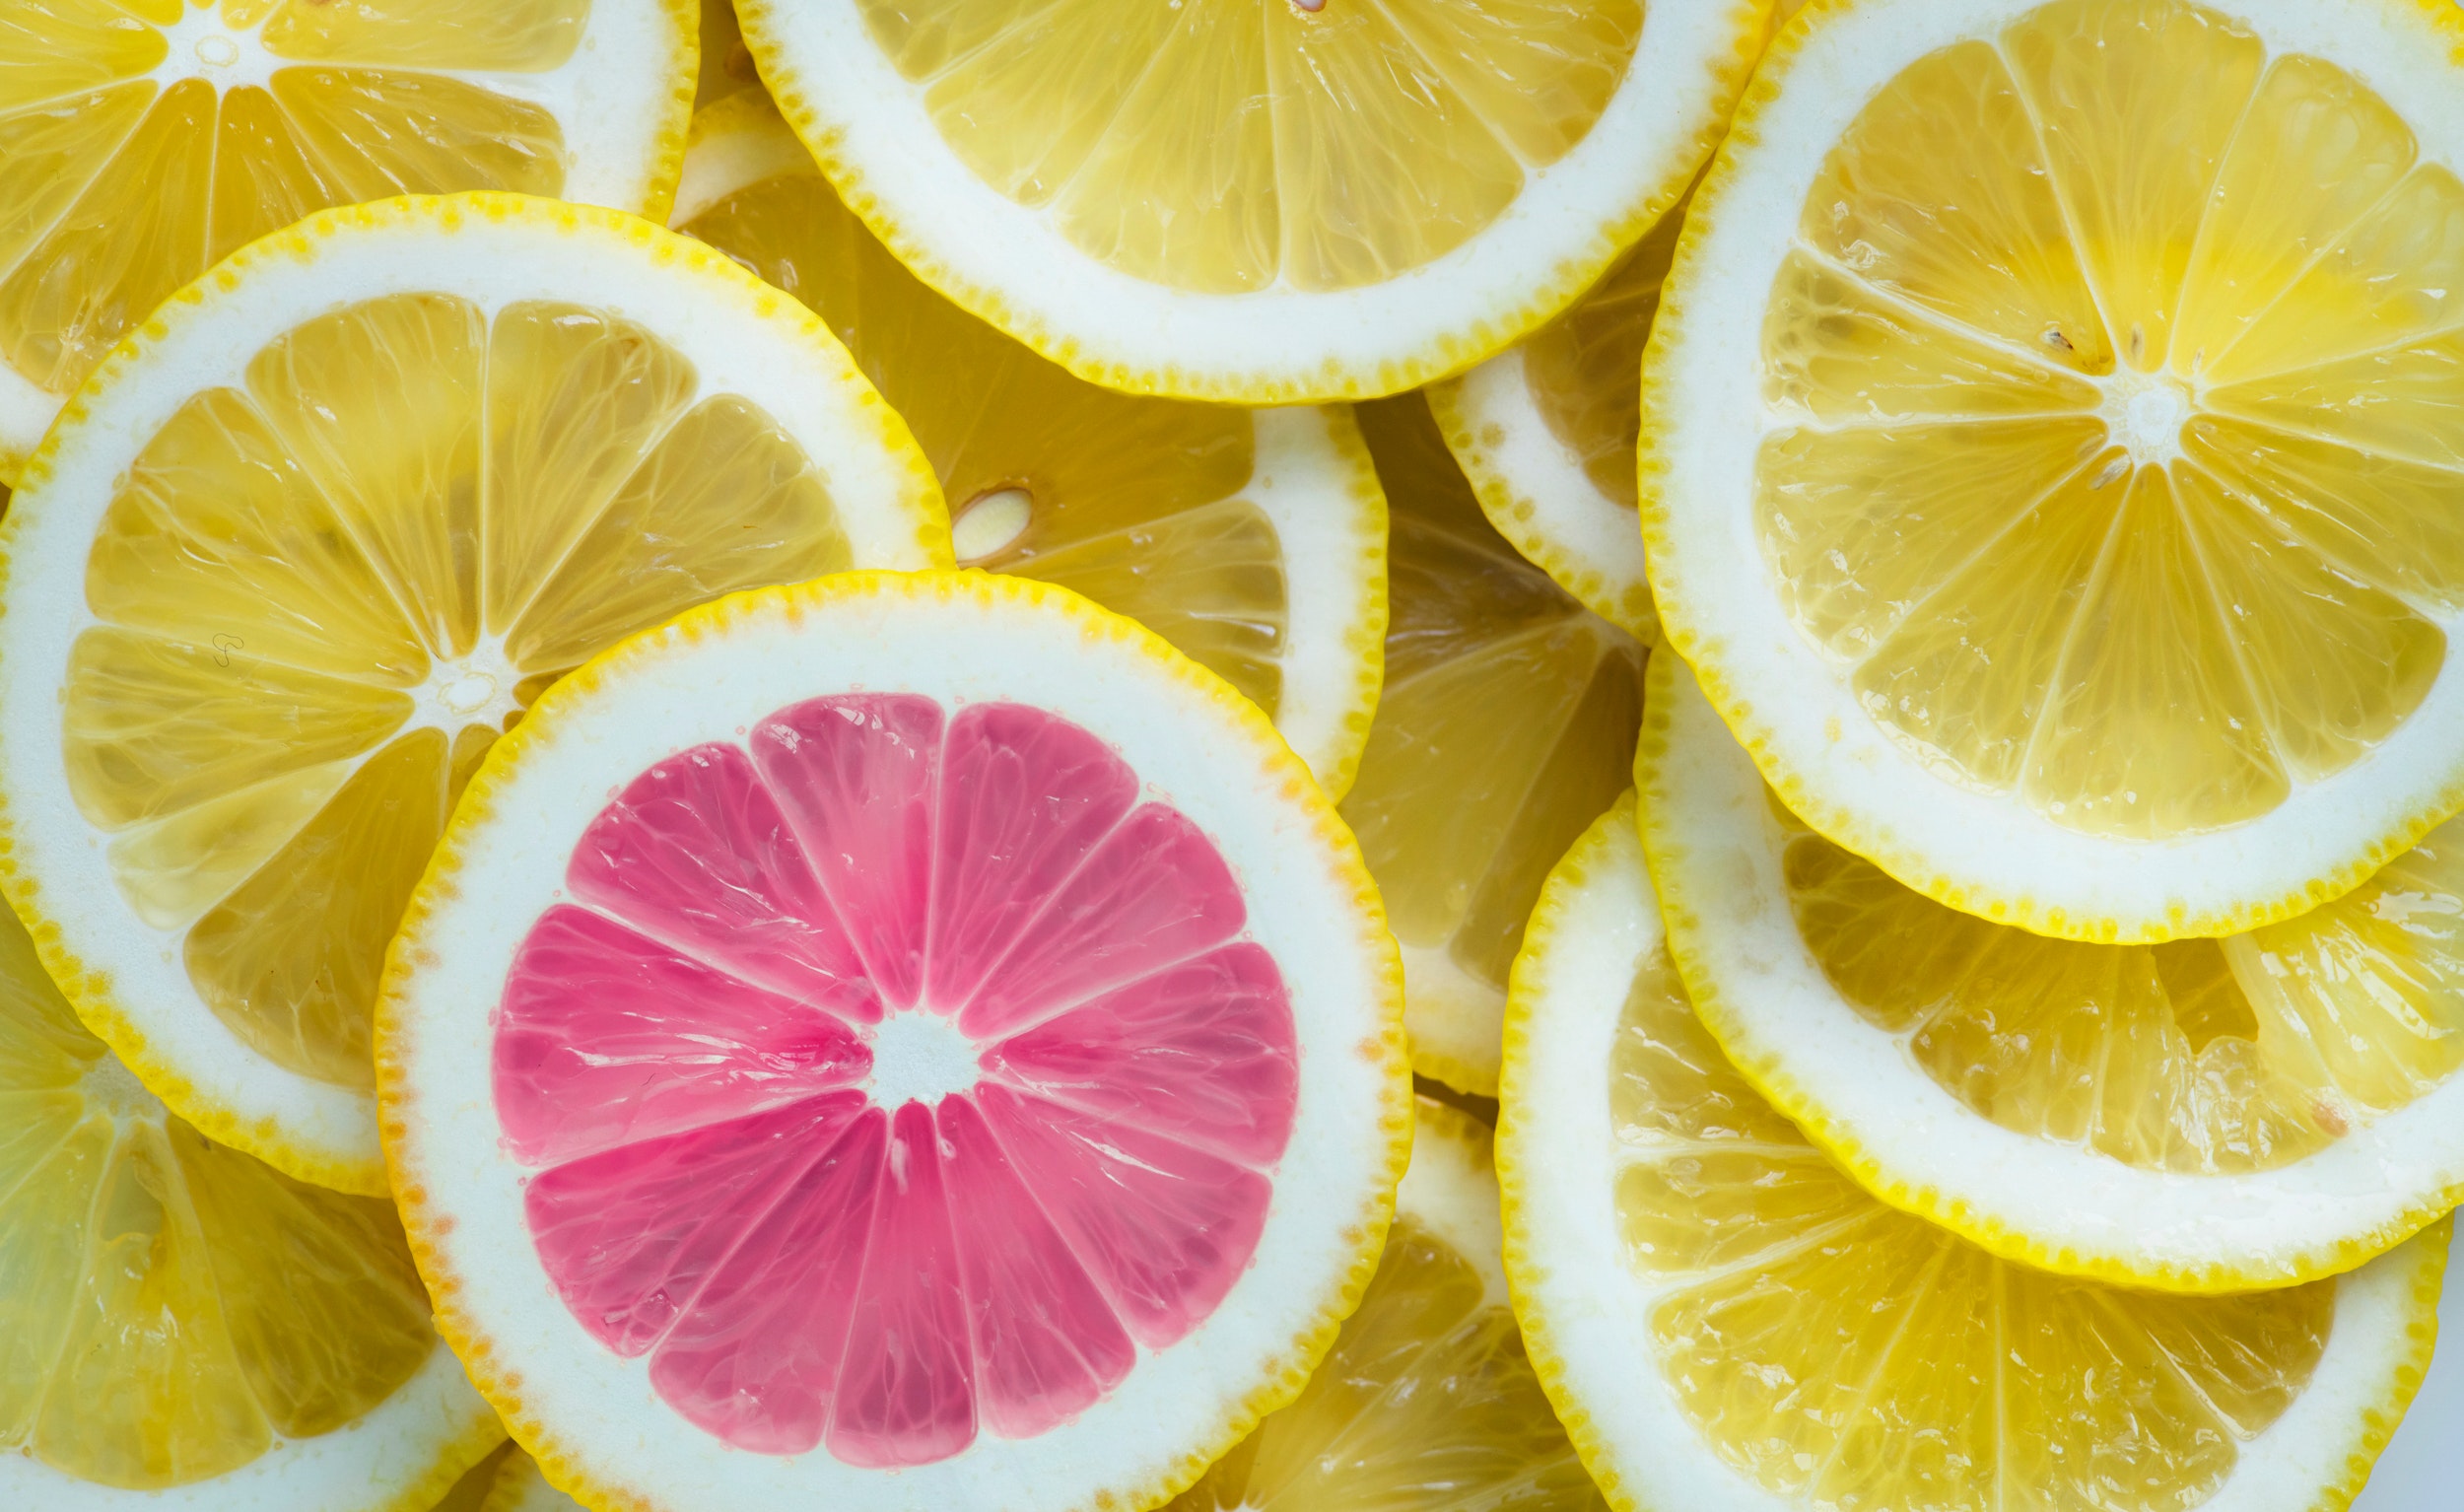 Slices of lemons and grapefruit